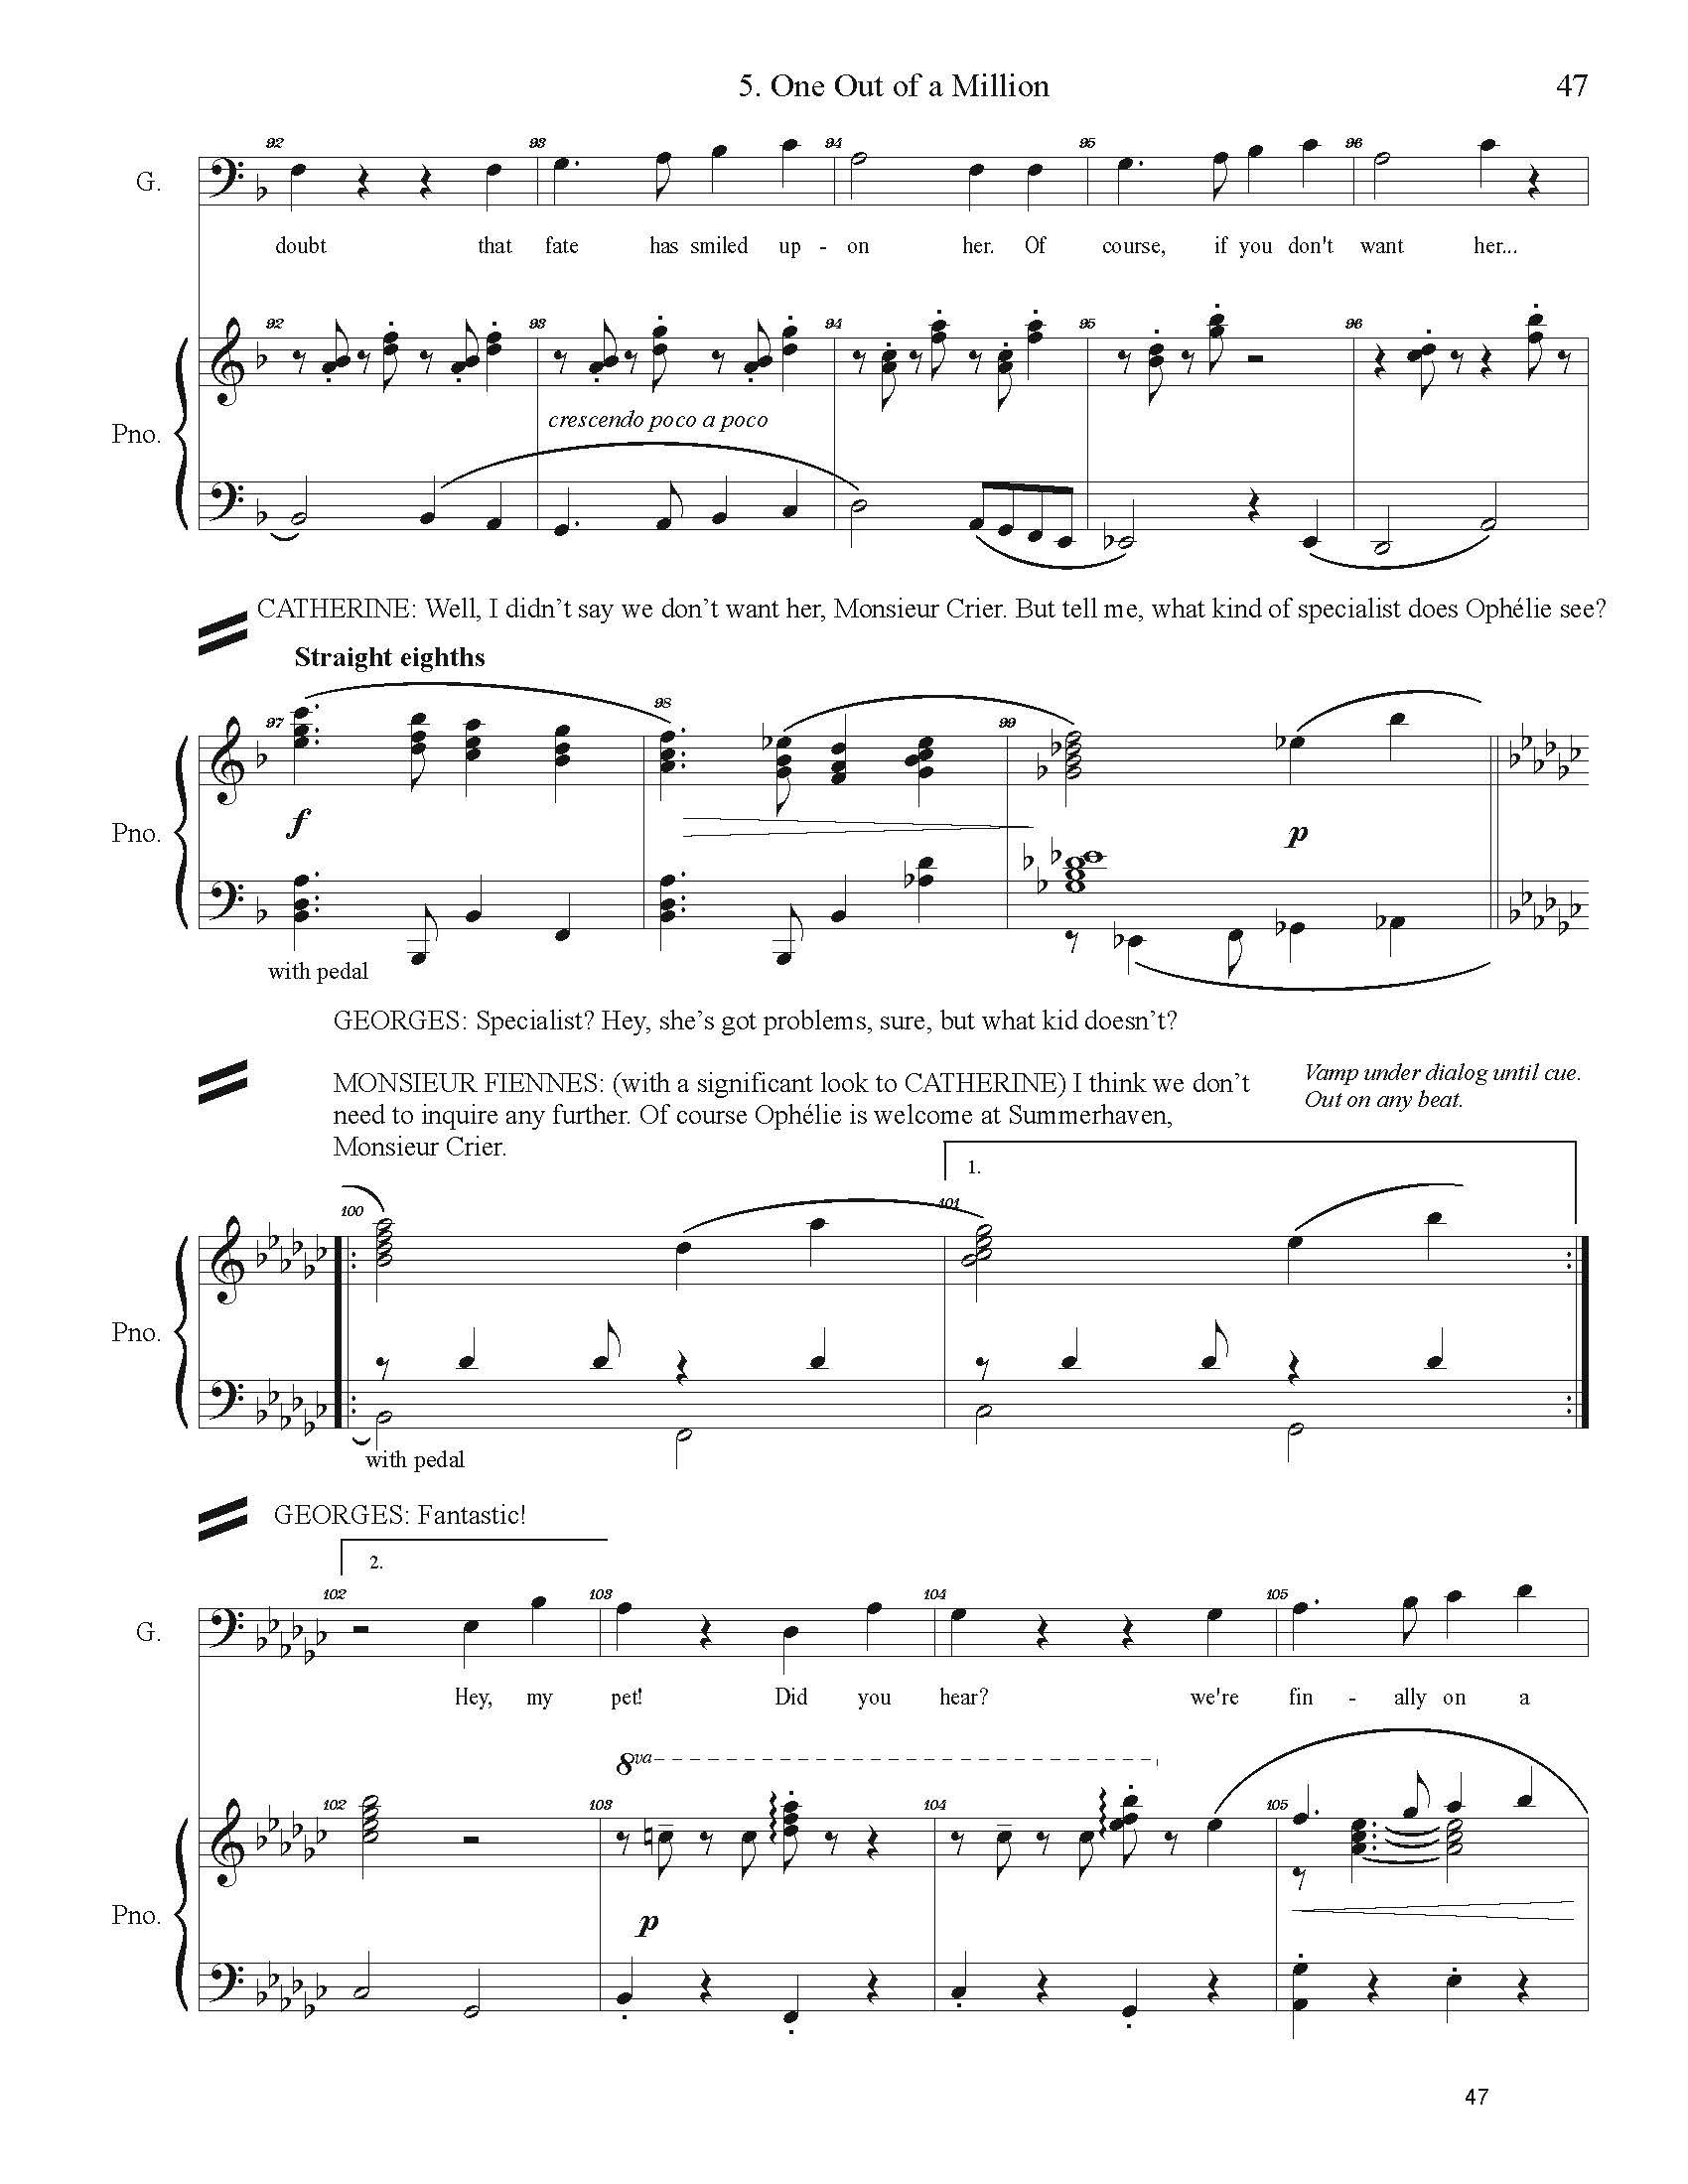 FULL PIANO VOCAL SCORE DRAFT 1 - Score_Page_047.jpg